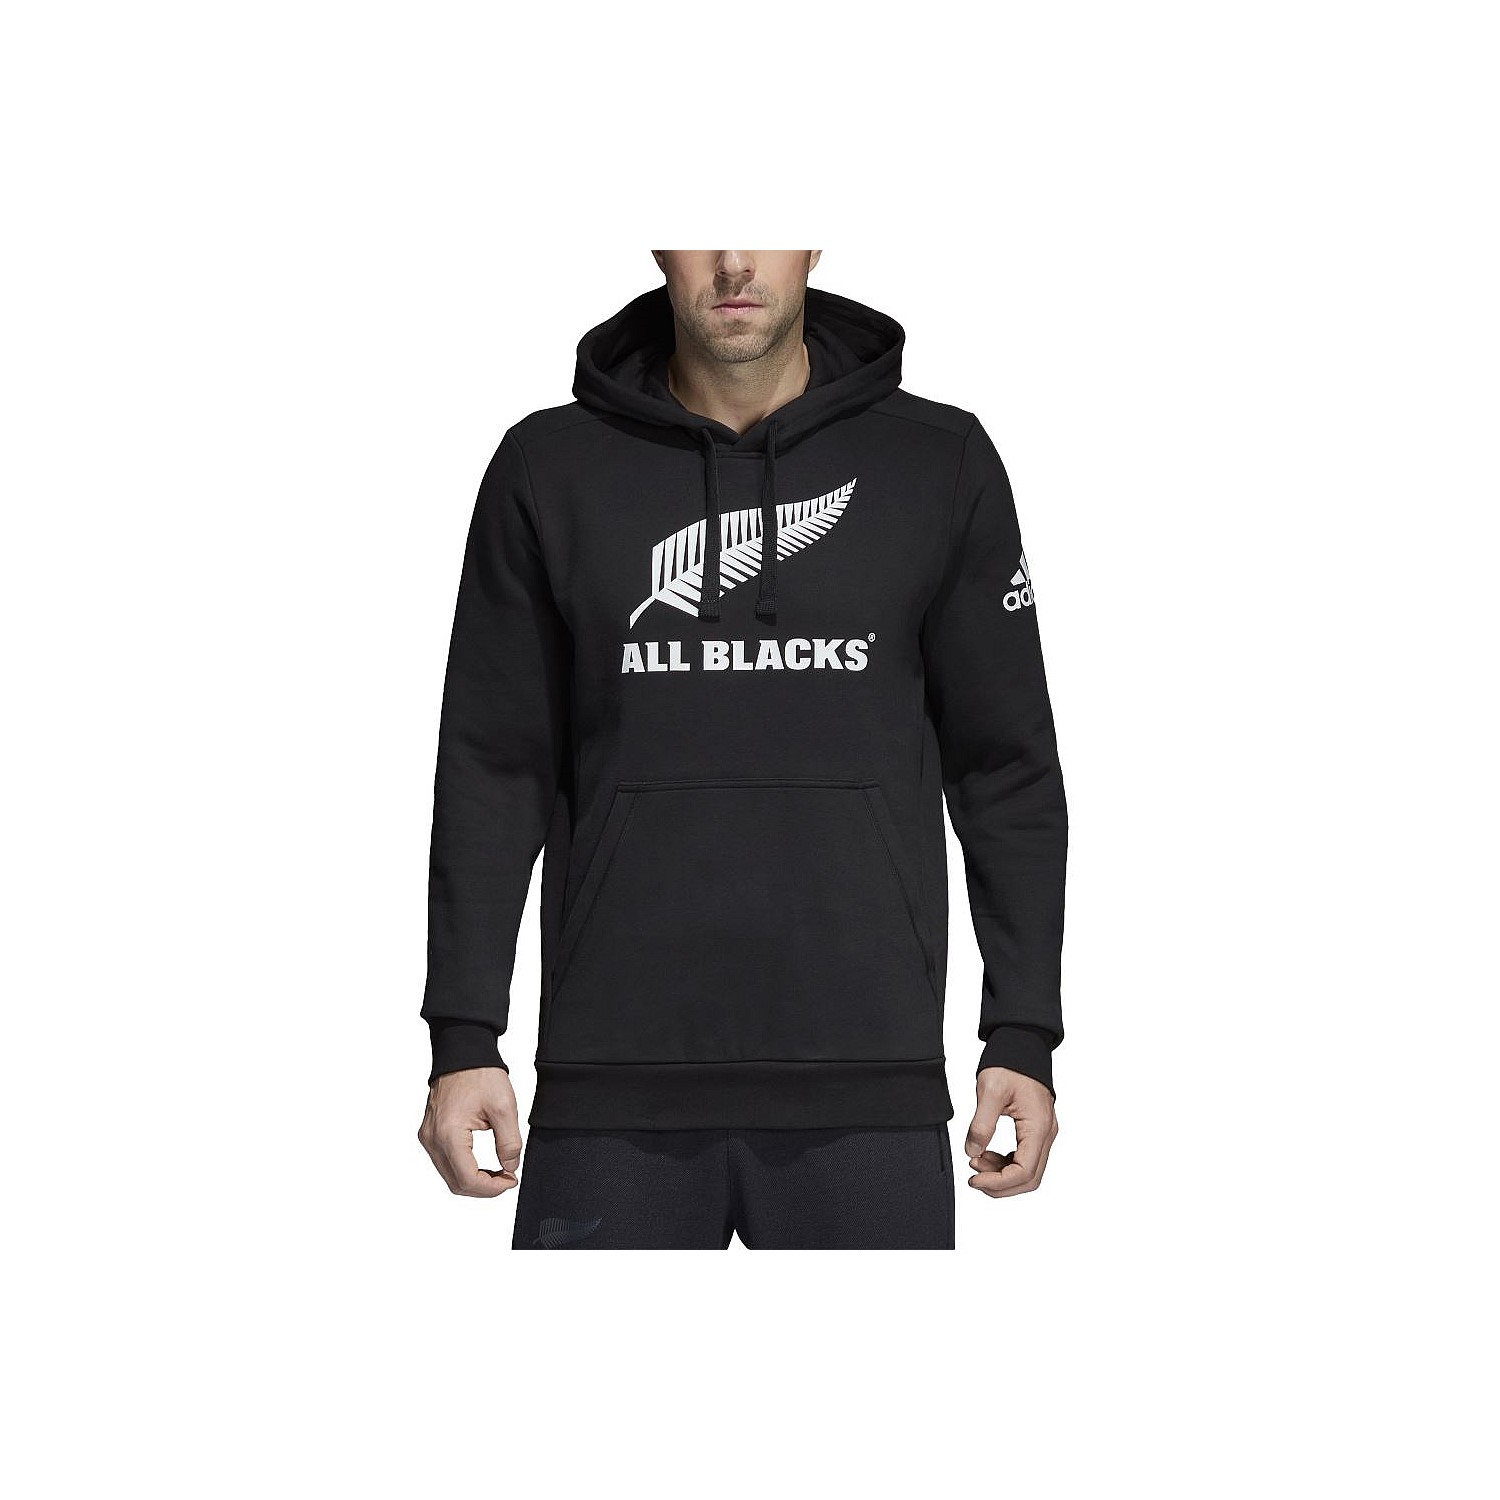 2018 New Zealand MAORI All Blacks rugby jacket hoodie S-3XL 